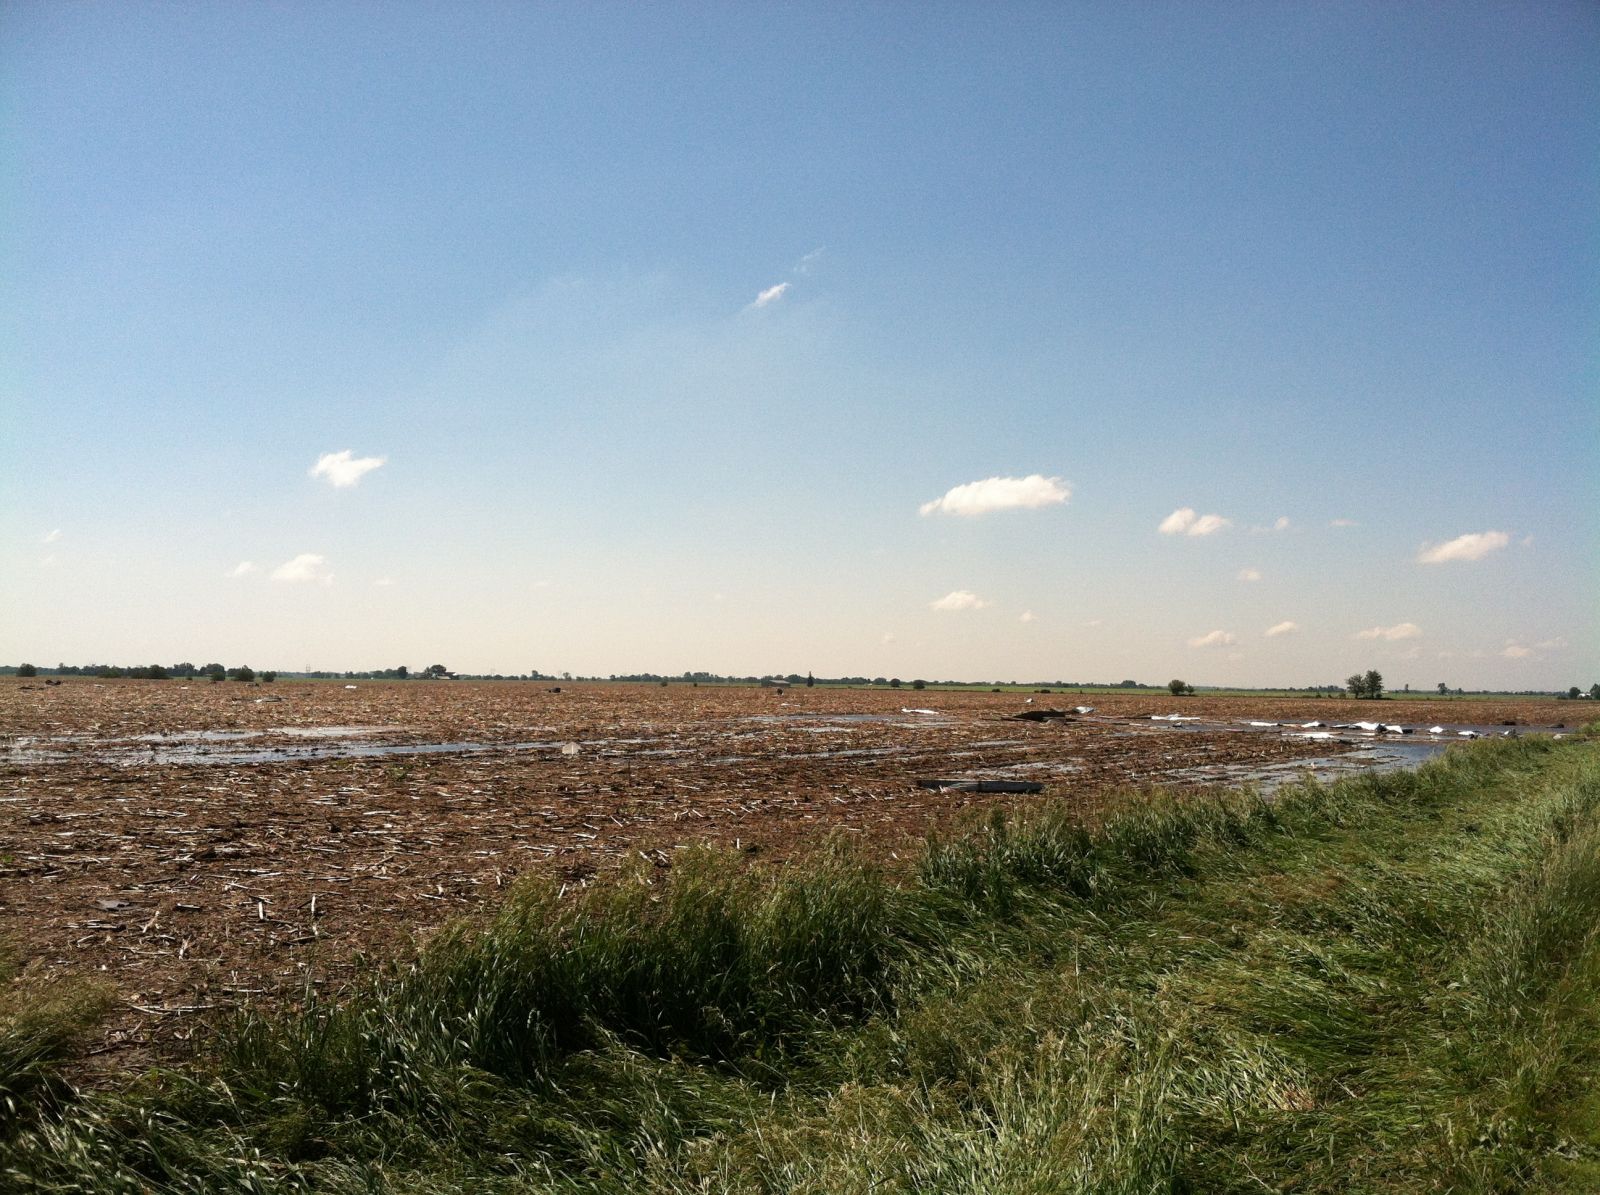 Debris in adjacent field.